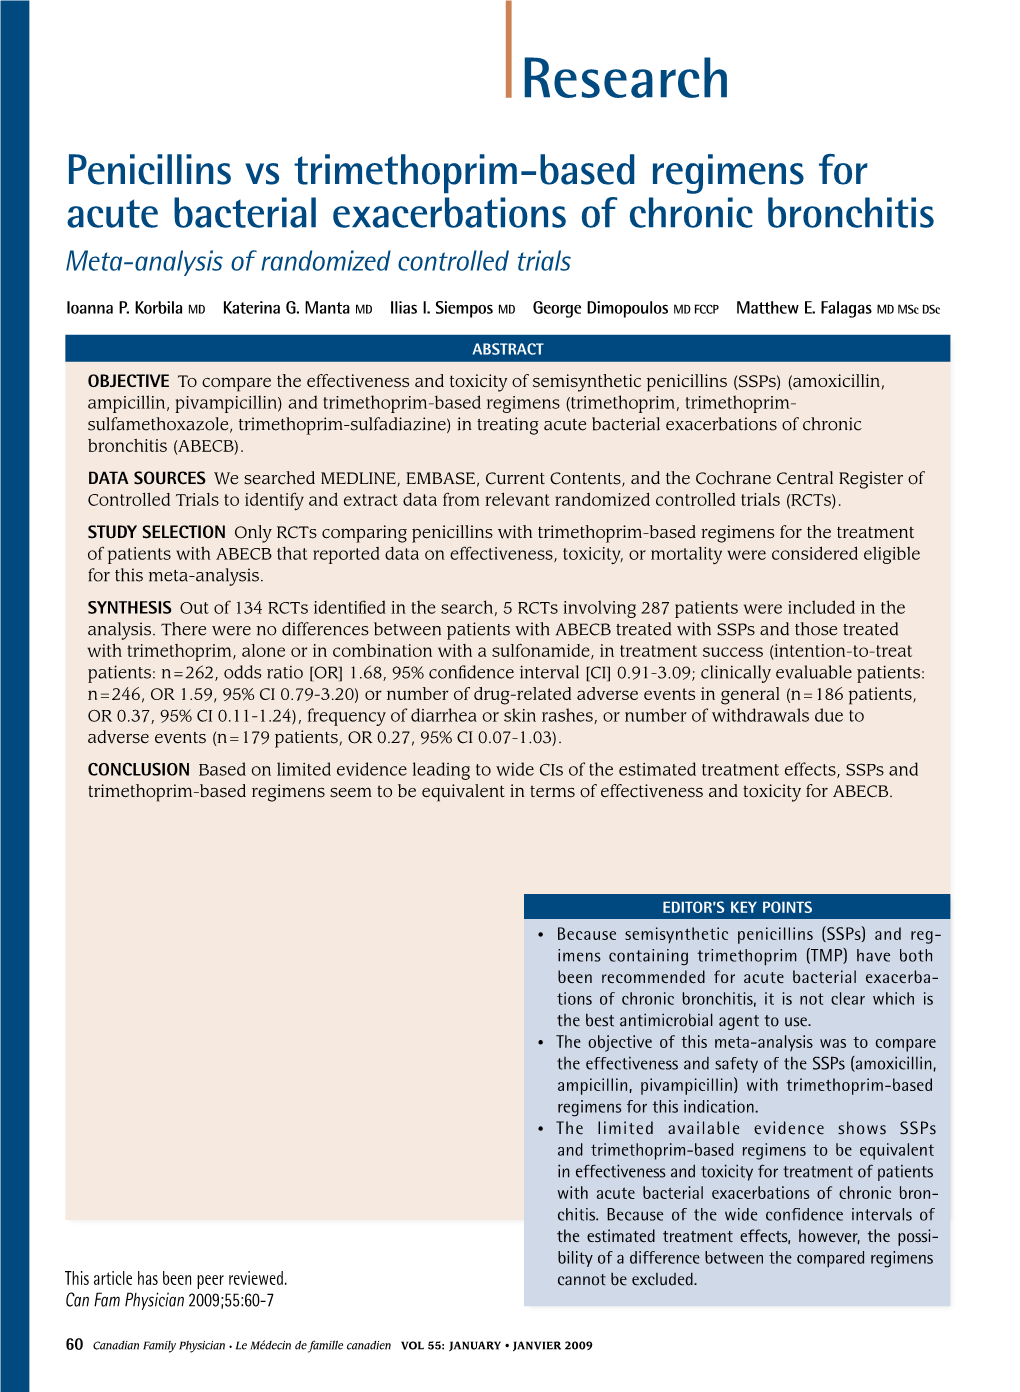 Research Penicillins Vs Trimethoprim-Based Regimens for Acute Bacterial Exacerbations of Chronic Bronchitis Meta-Analysis of Randomized Controlled Trials